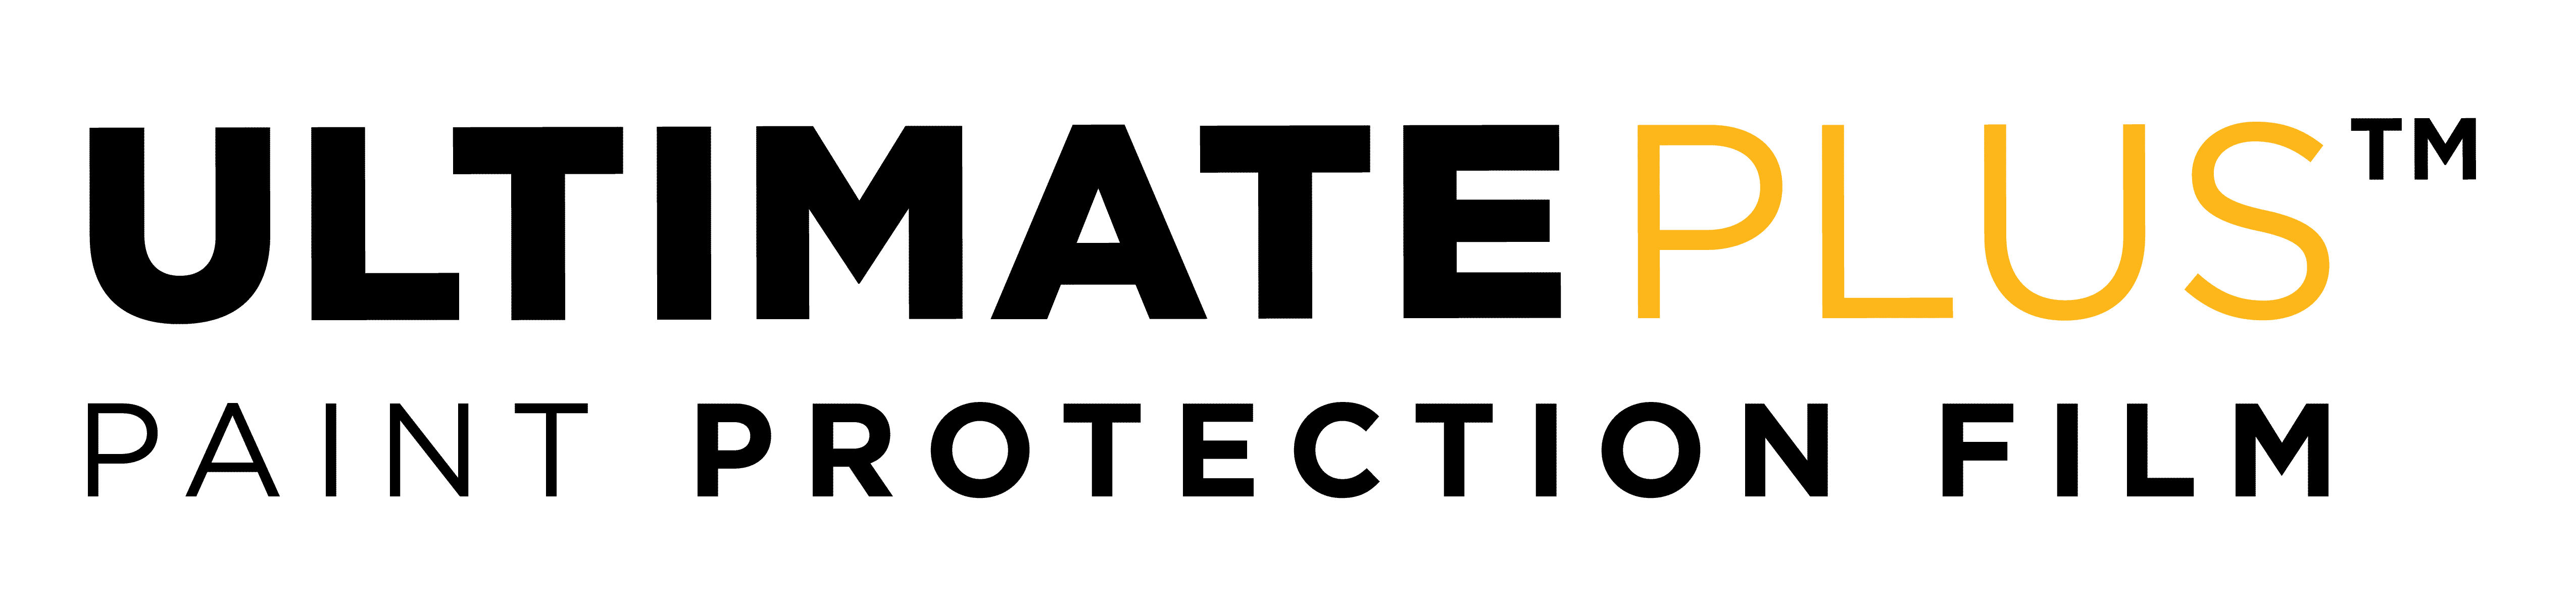 Ultimate Plus Paint Protection Film - Logo